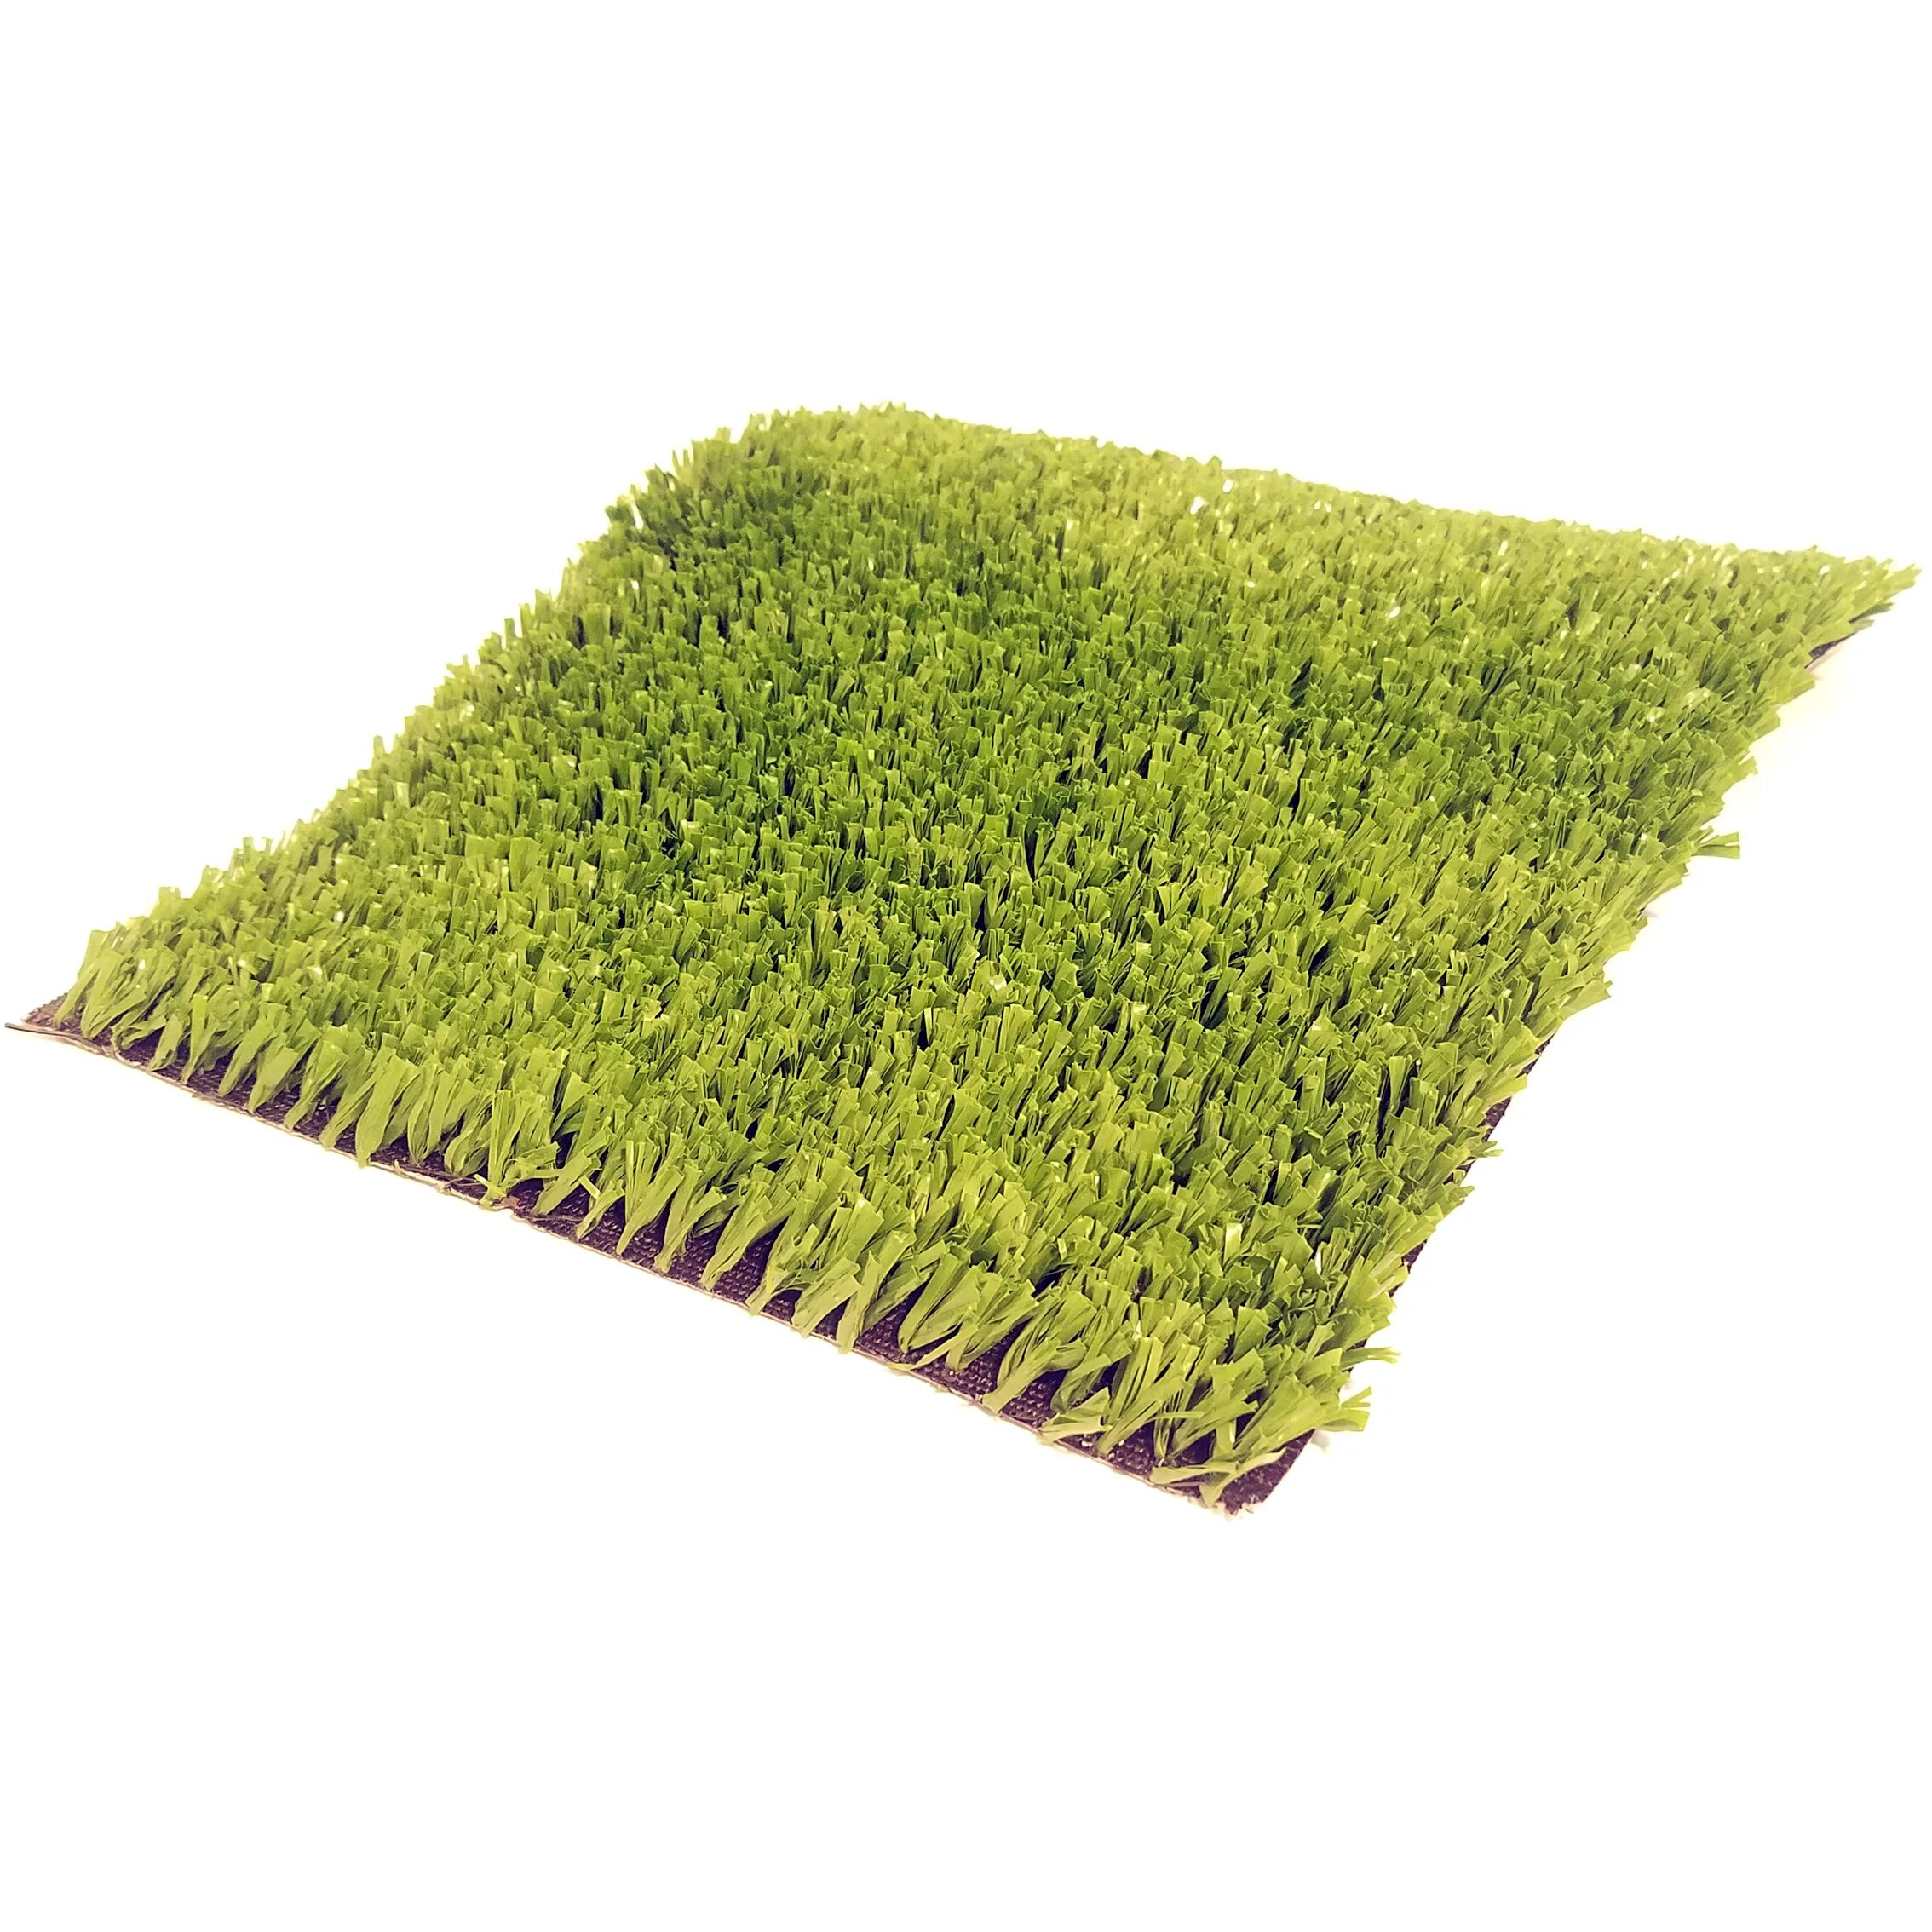 Фарингазон цена. Трово мм искусственная трава 20. Искусственный газон 20мм. Искусственная длинная трава. Искусственная трава высокая для декора.